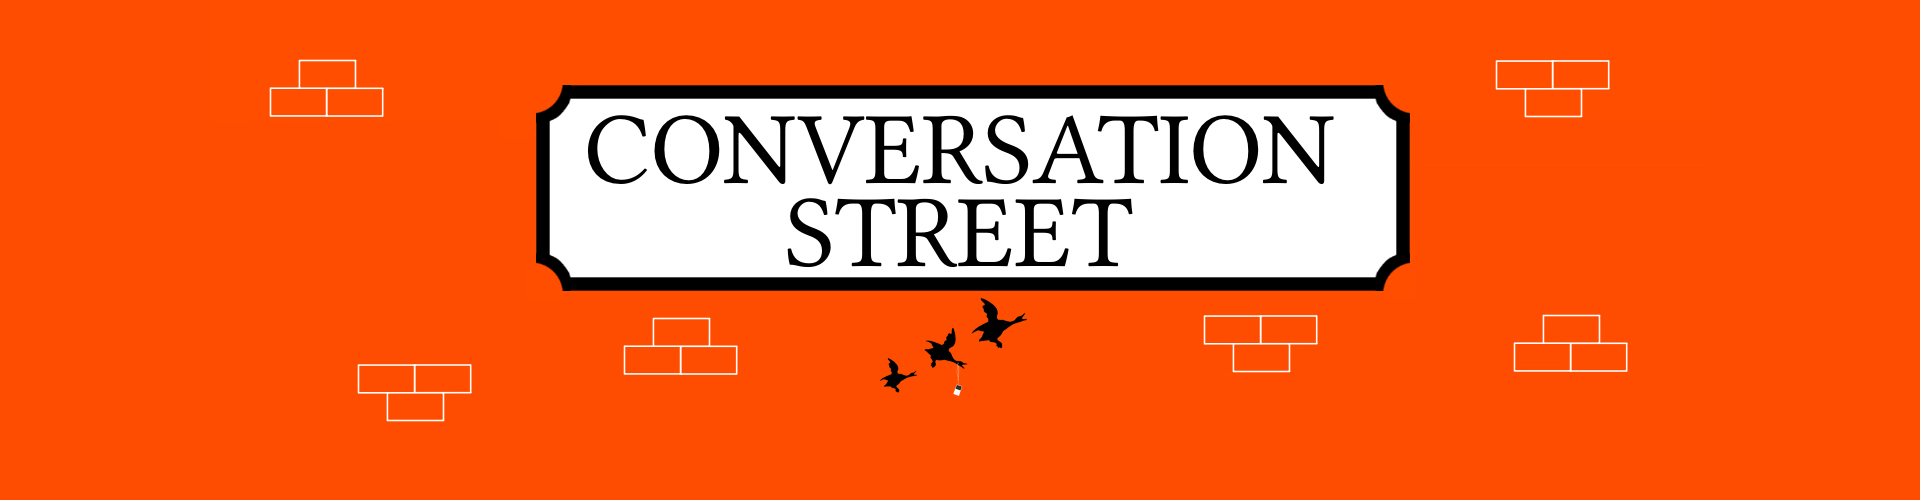 Conversation Street